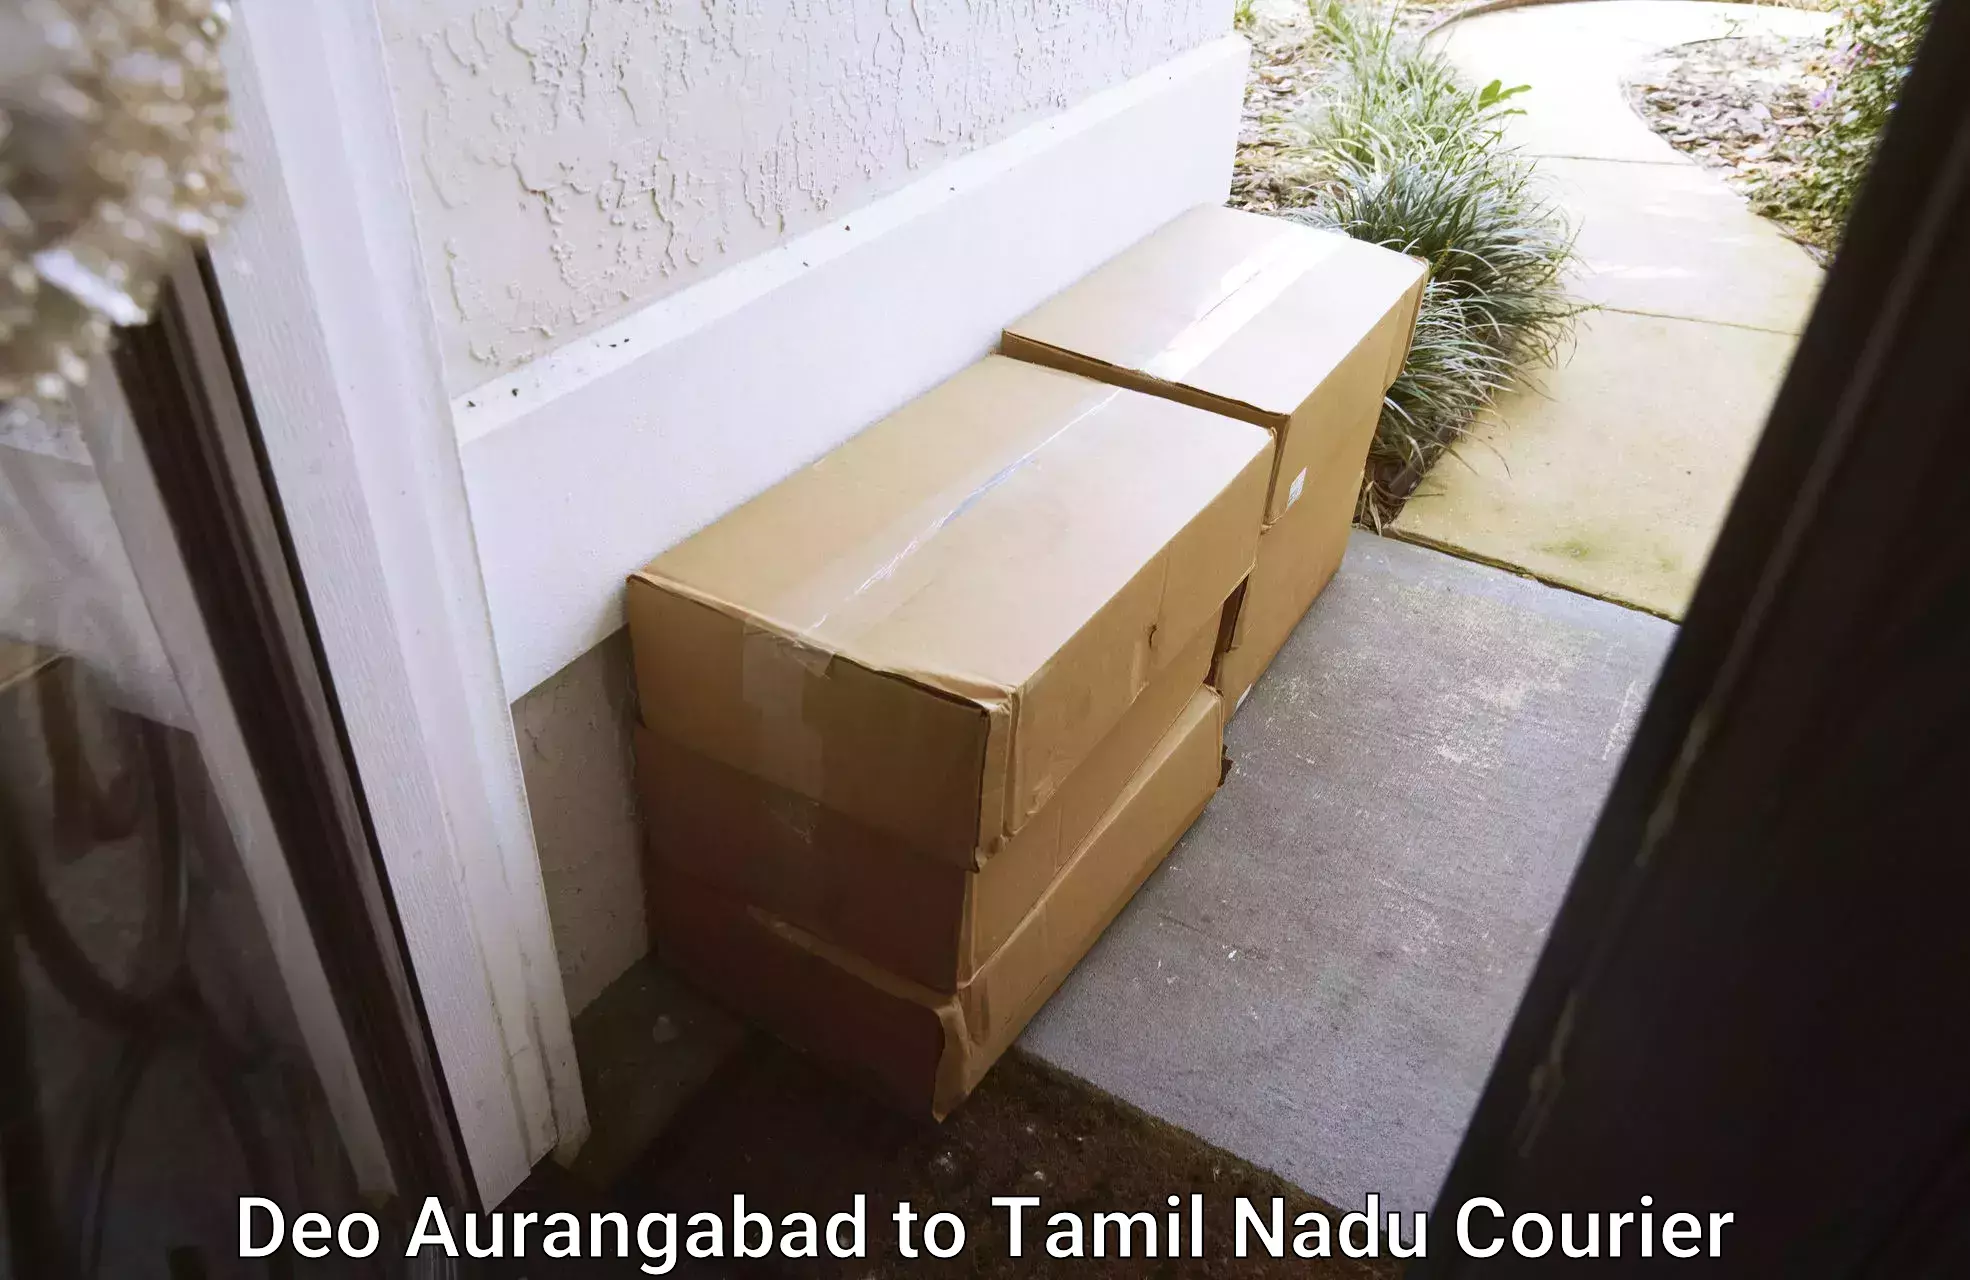 Household goods transport service Deo Aurangabad to Tamil Nadu